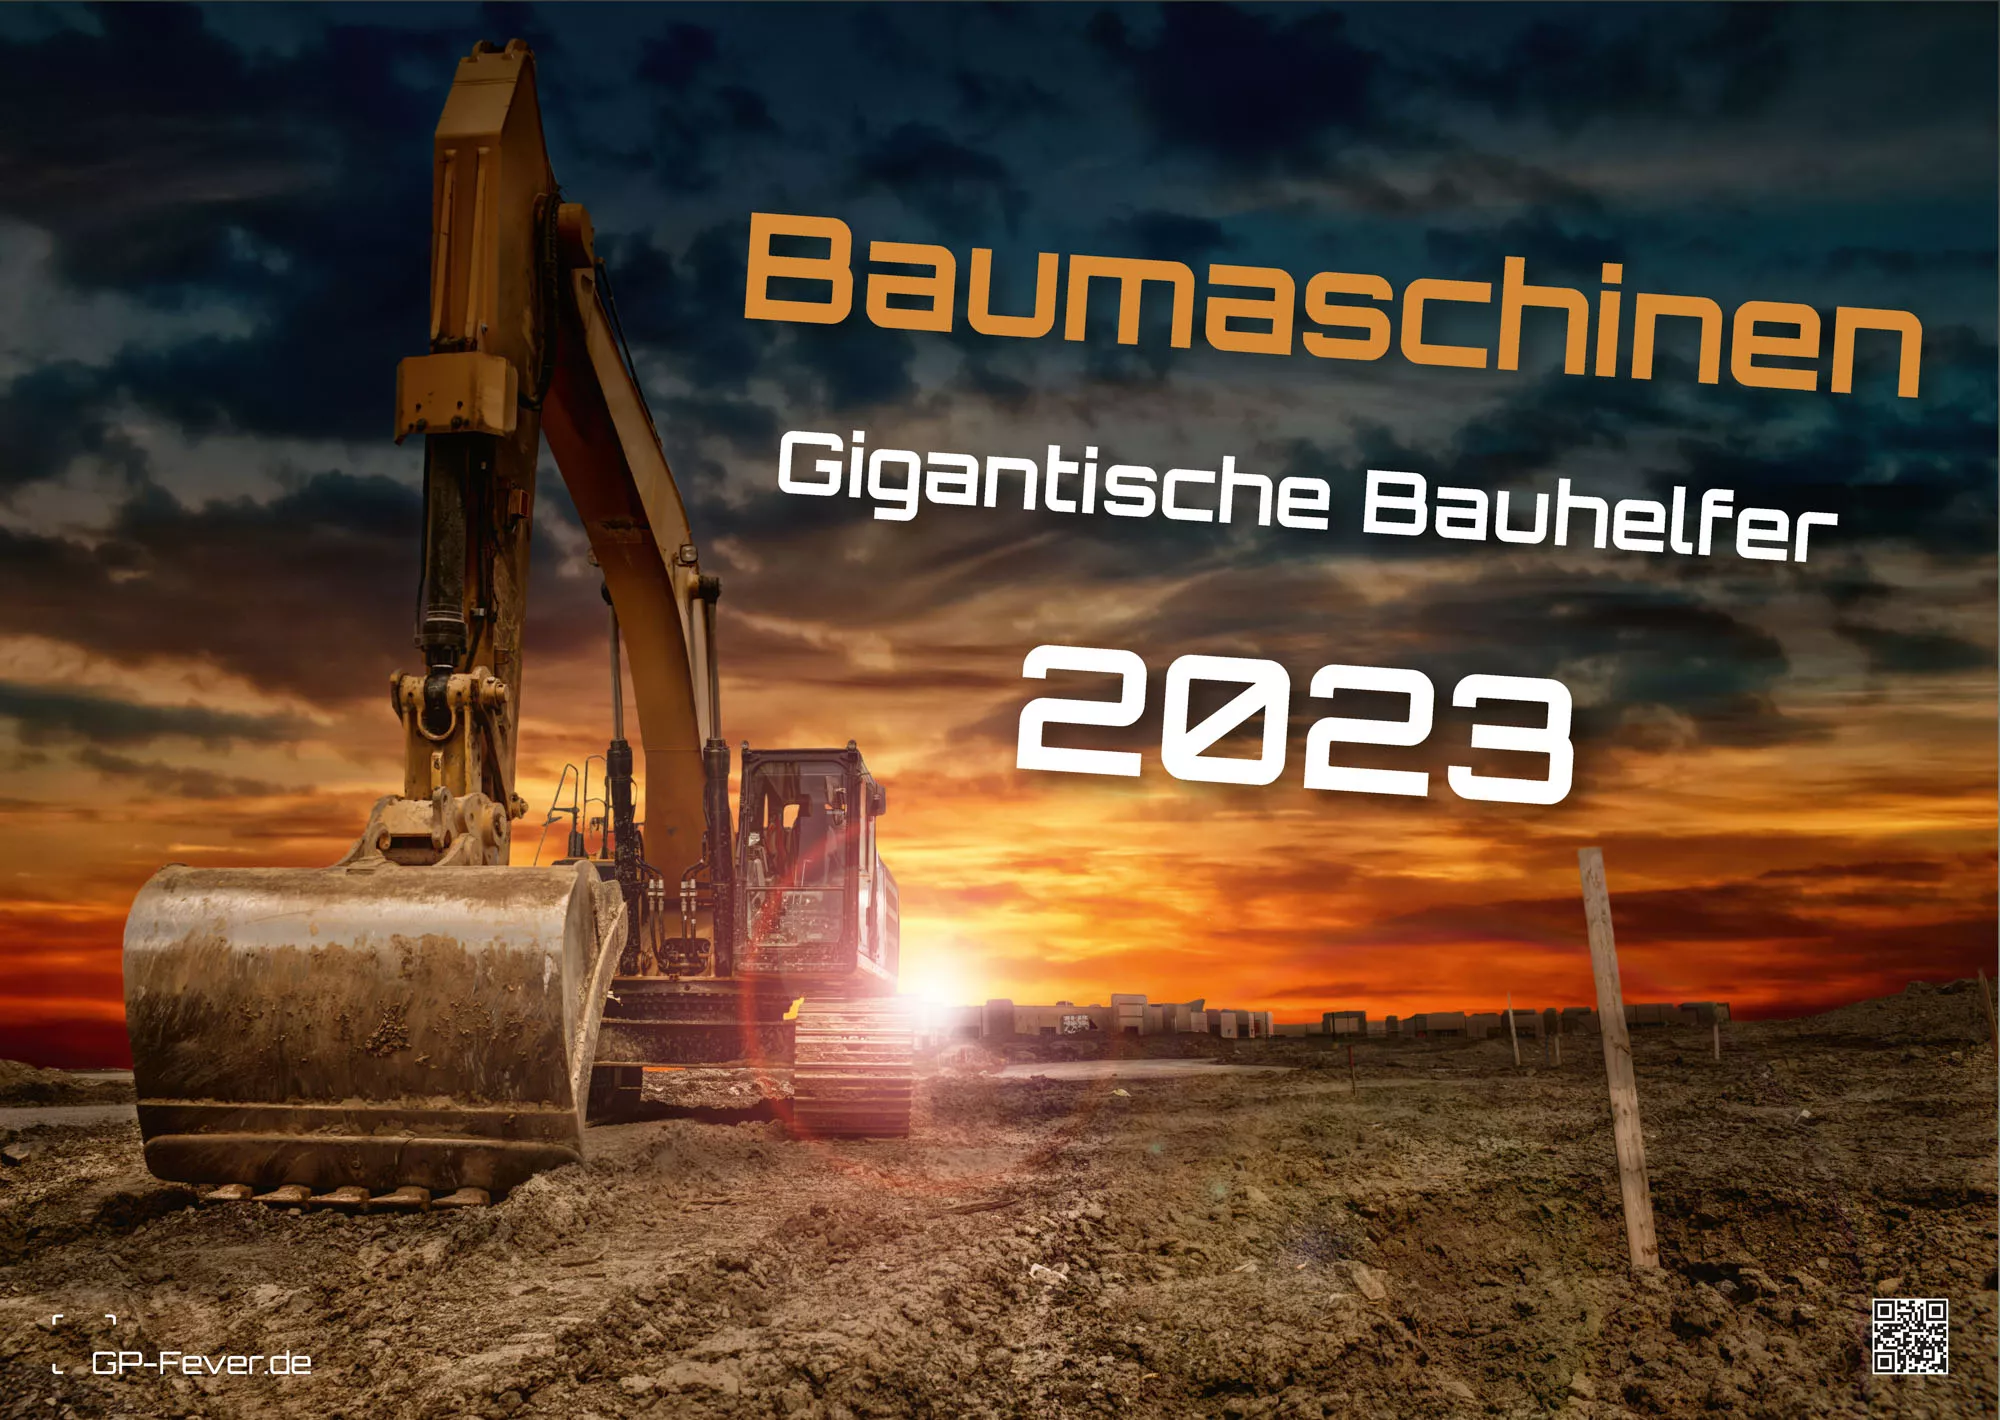 Baumaschinen - gigantische Bauhelfer - 2023 - Kalender